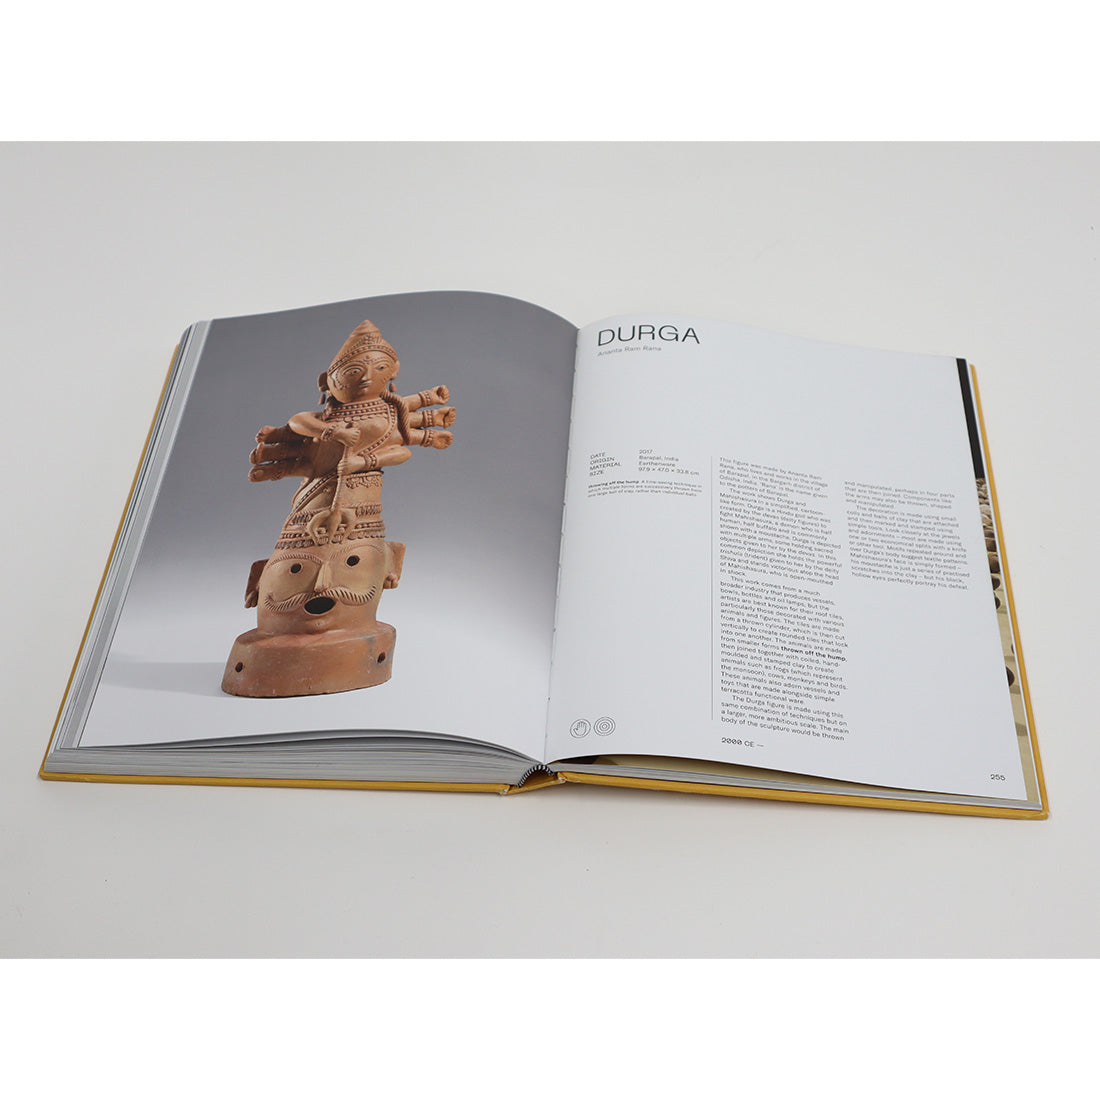 Ceramics: An Atlas of Forms by Glenn Barkley